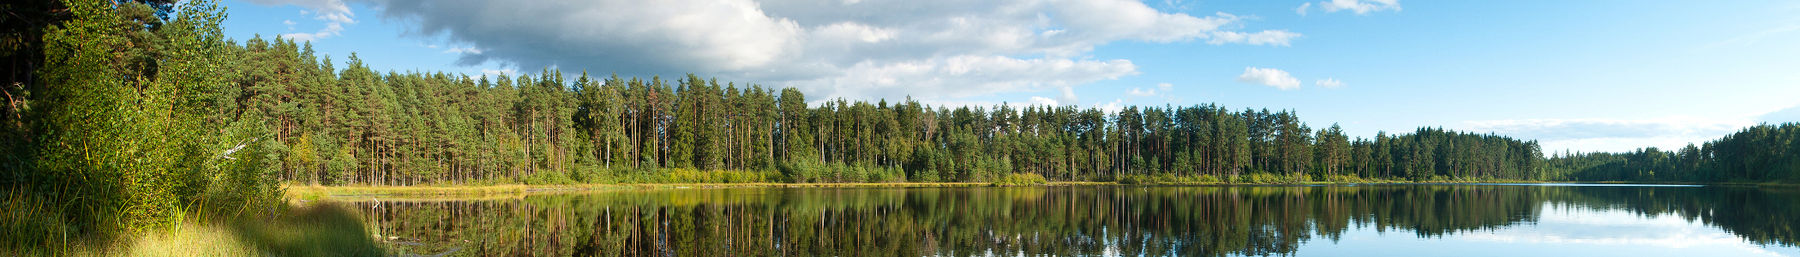 Southern Estonia banner.jpg